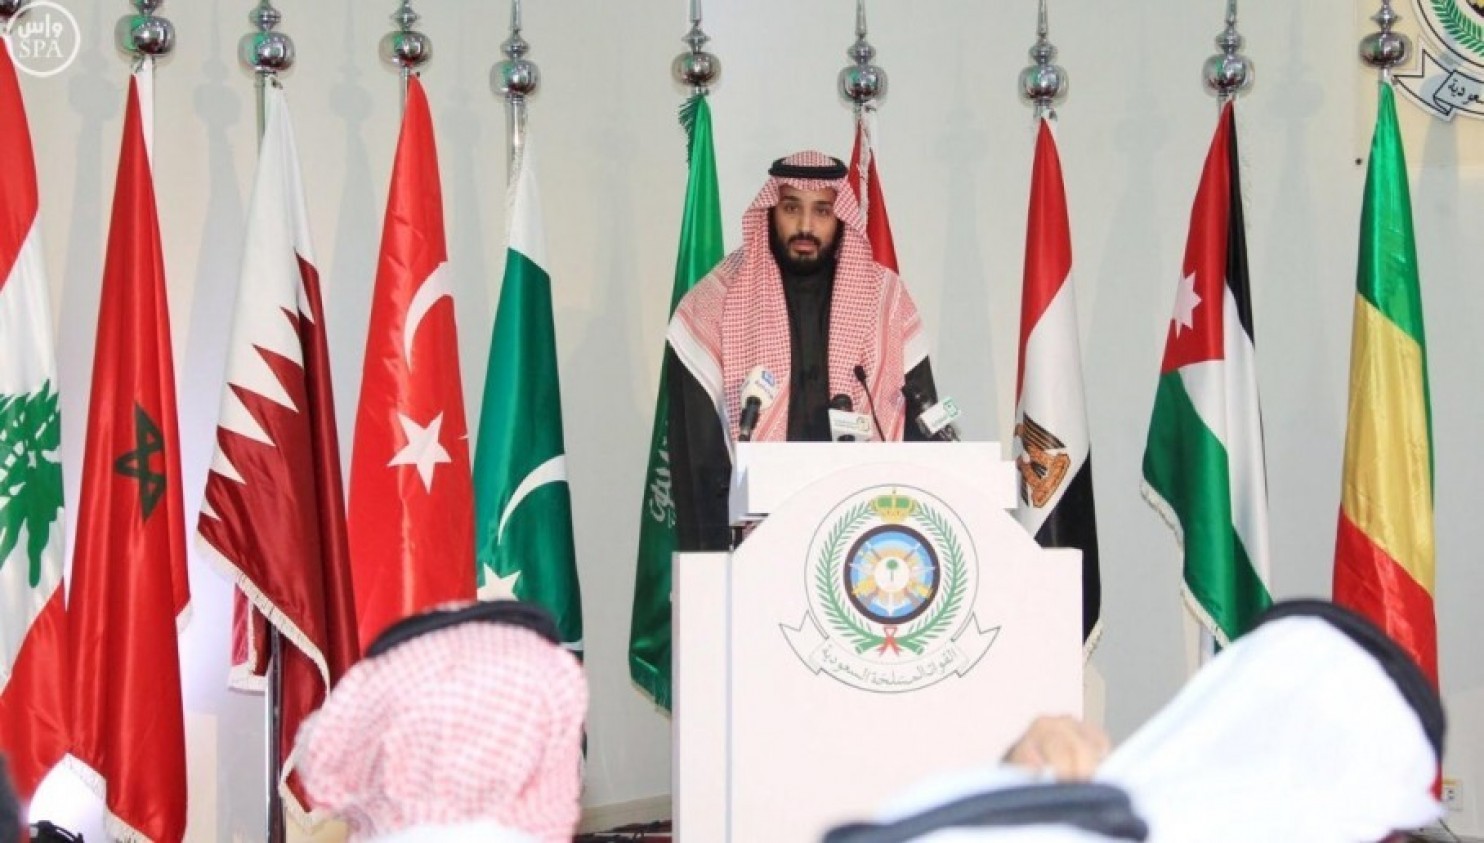 Saudis, Turks Bid to Open Lebanon Front: Report